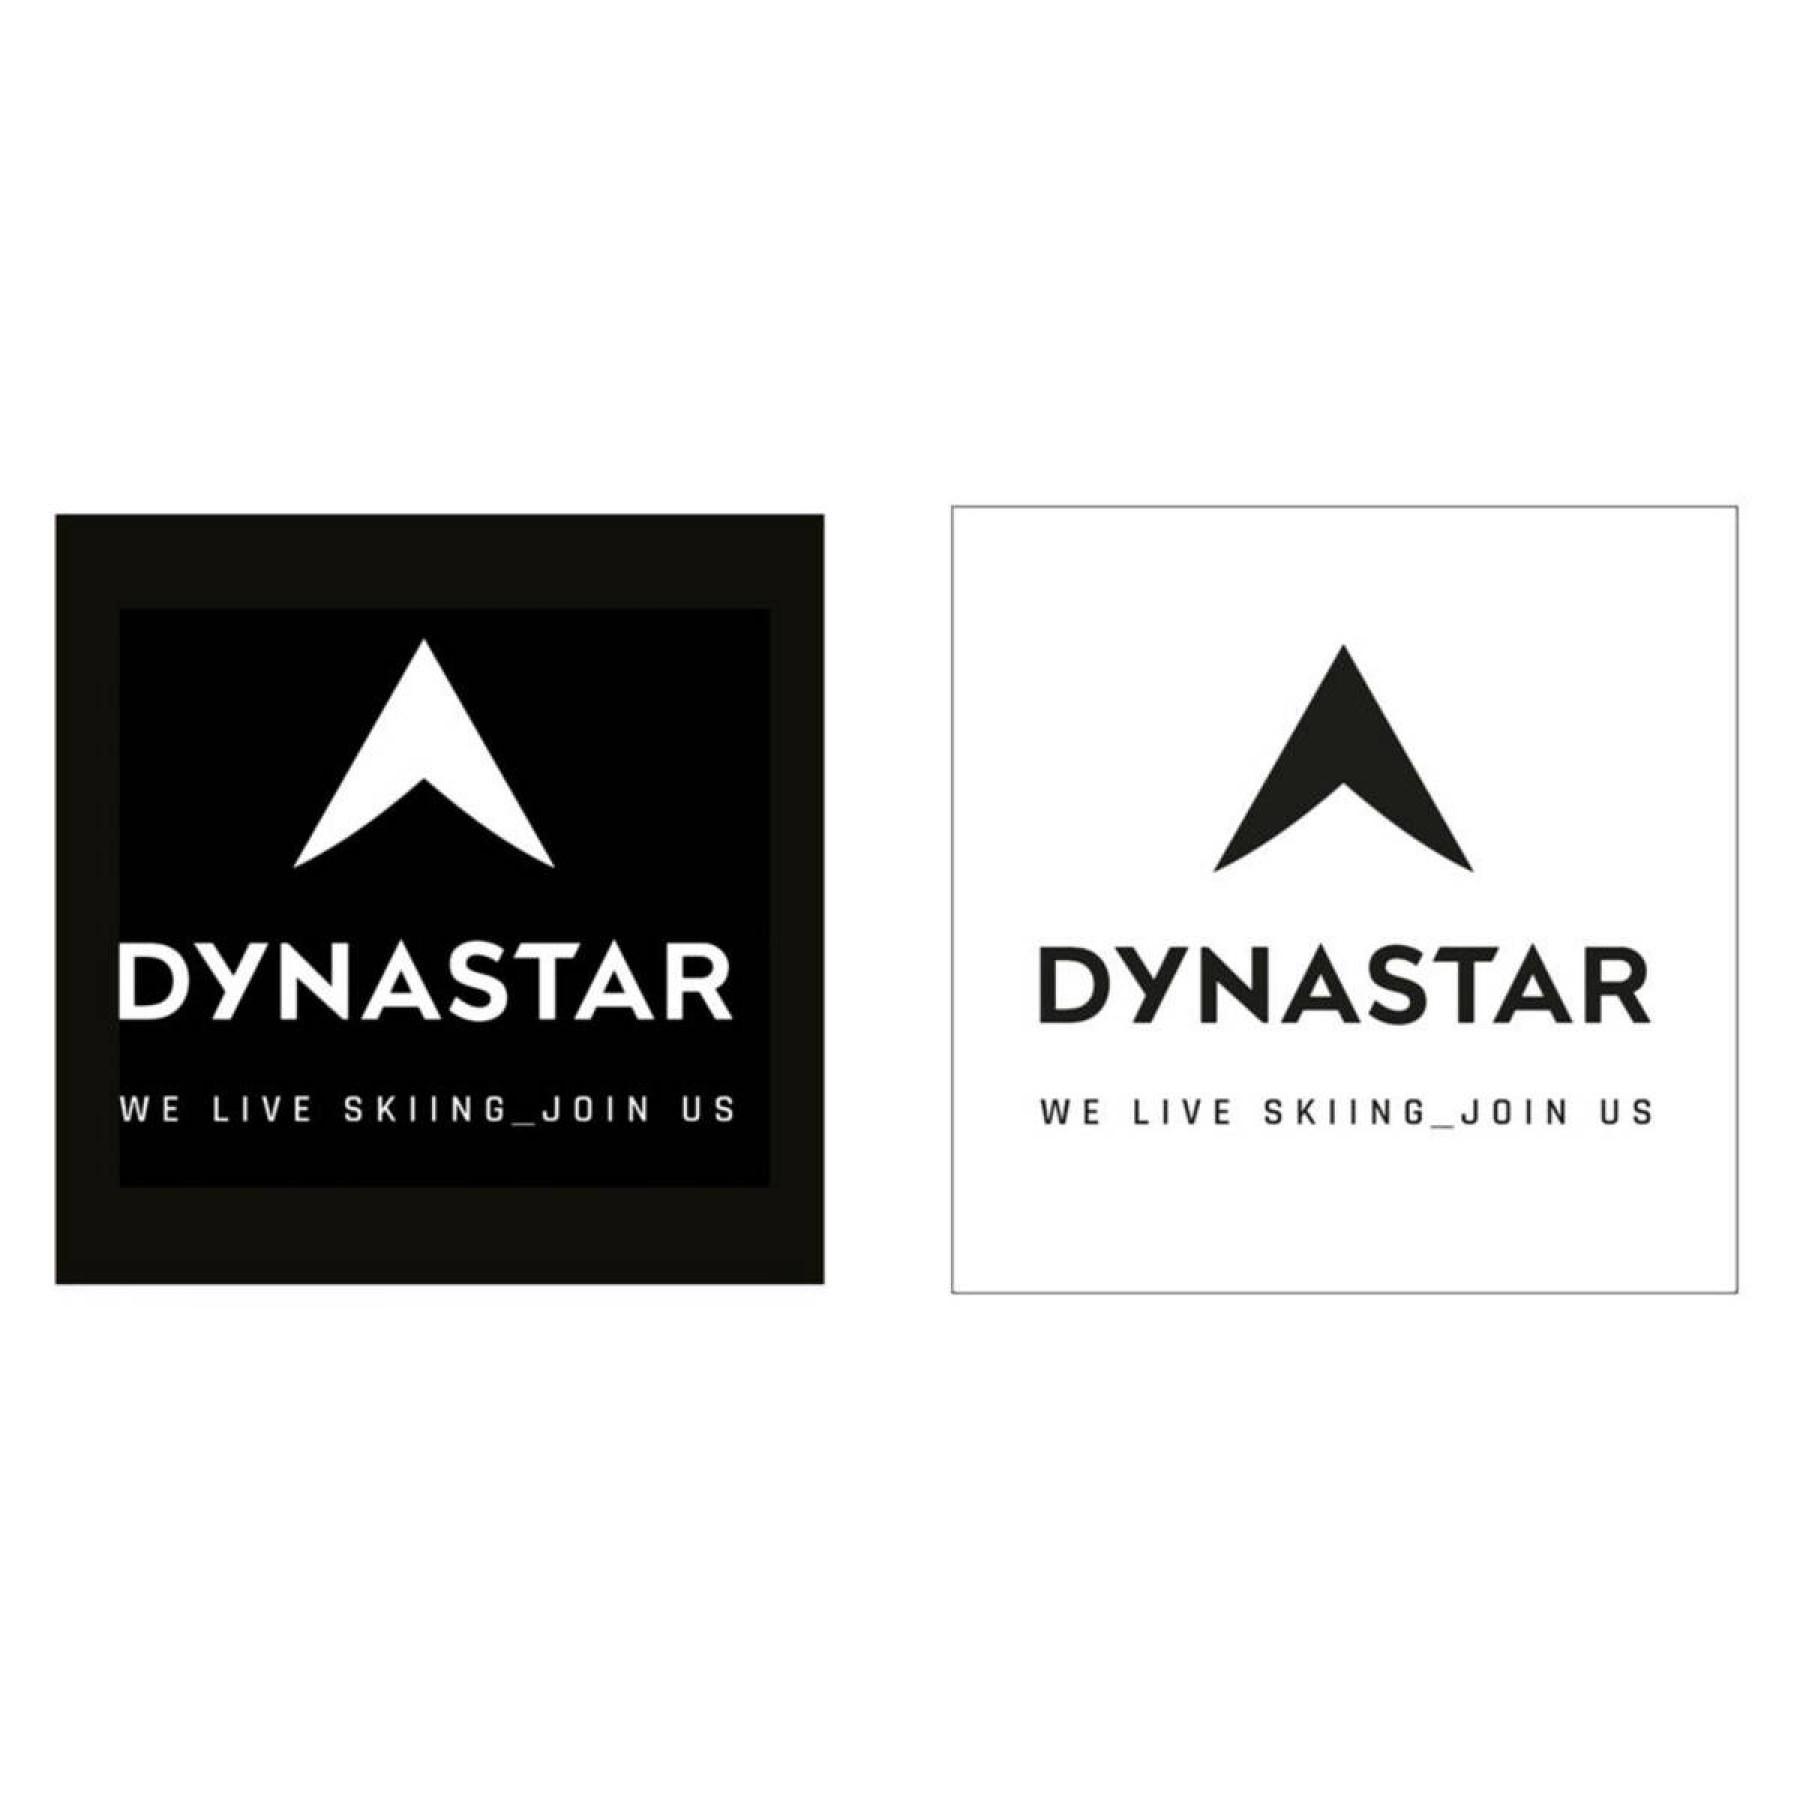 Adesivi Dynastar L10 corporate